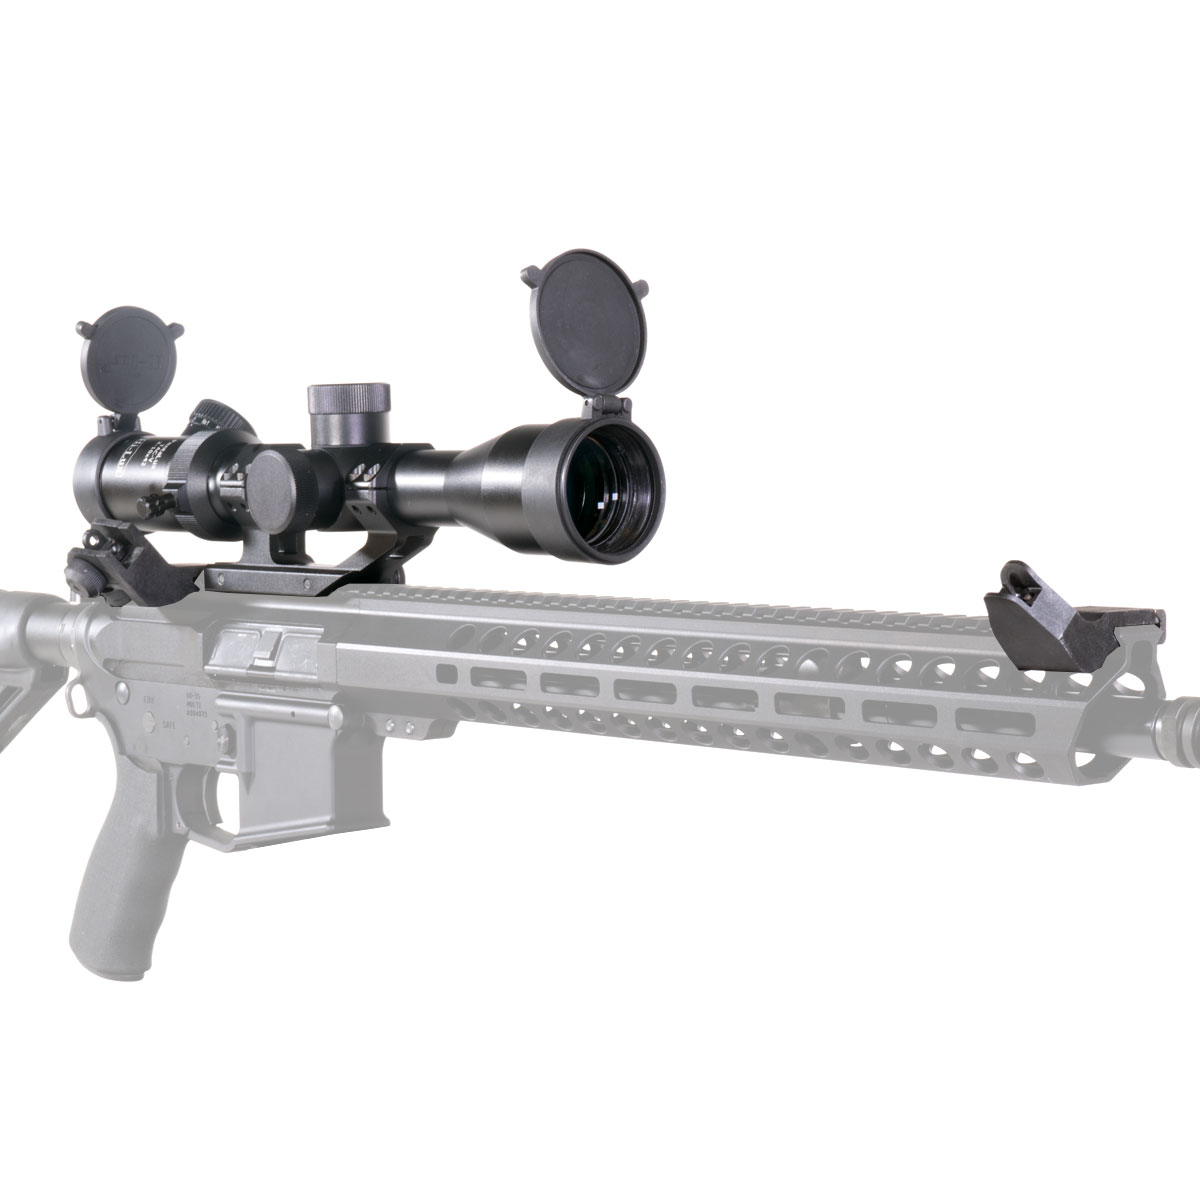 Range Loadout: PentaLux TAC-V 2-10X42, 30mm Tube Rifle Scope + Single Piece Optic Mount + JE Machine Glass Filled Polymer 45 Degree Offset Sights